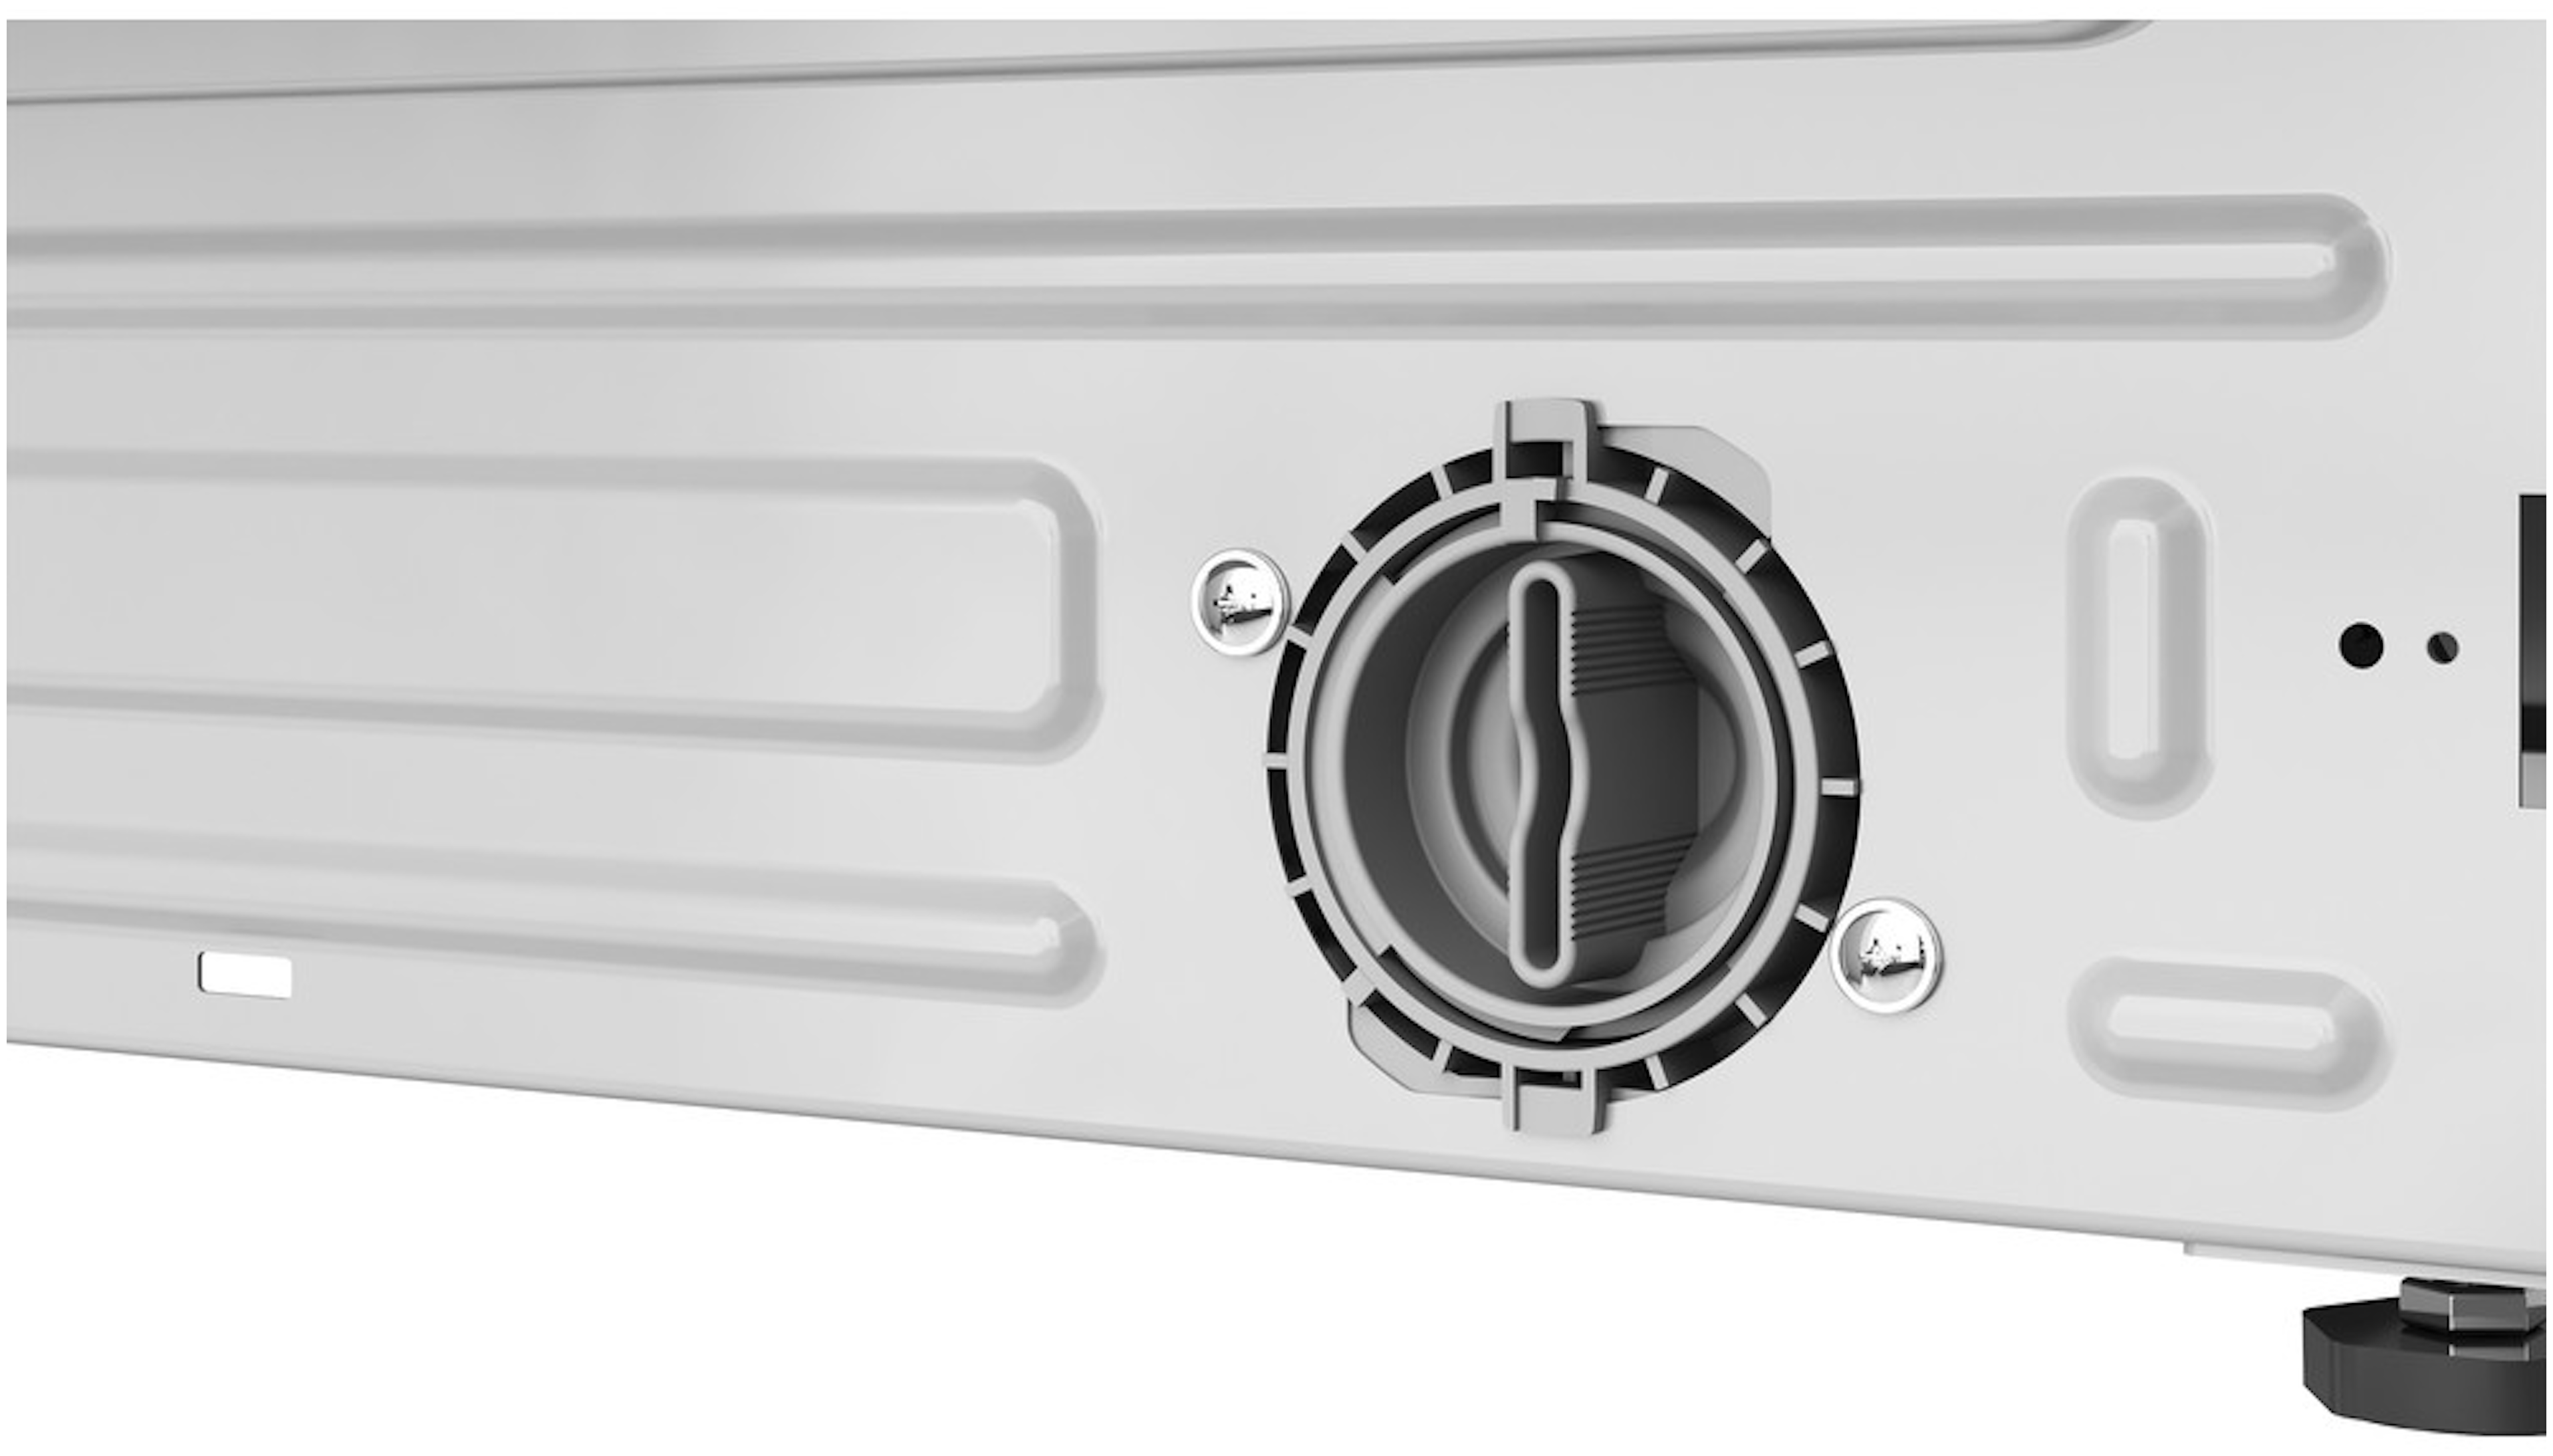 Whirlpool BIWMWG91485EU inbouw wasmachine afbeelding 5